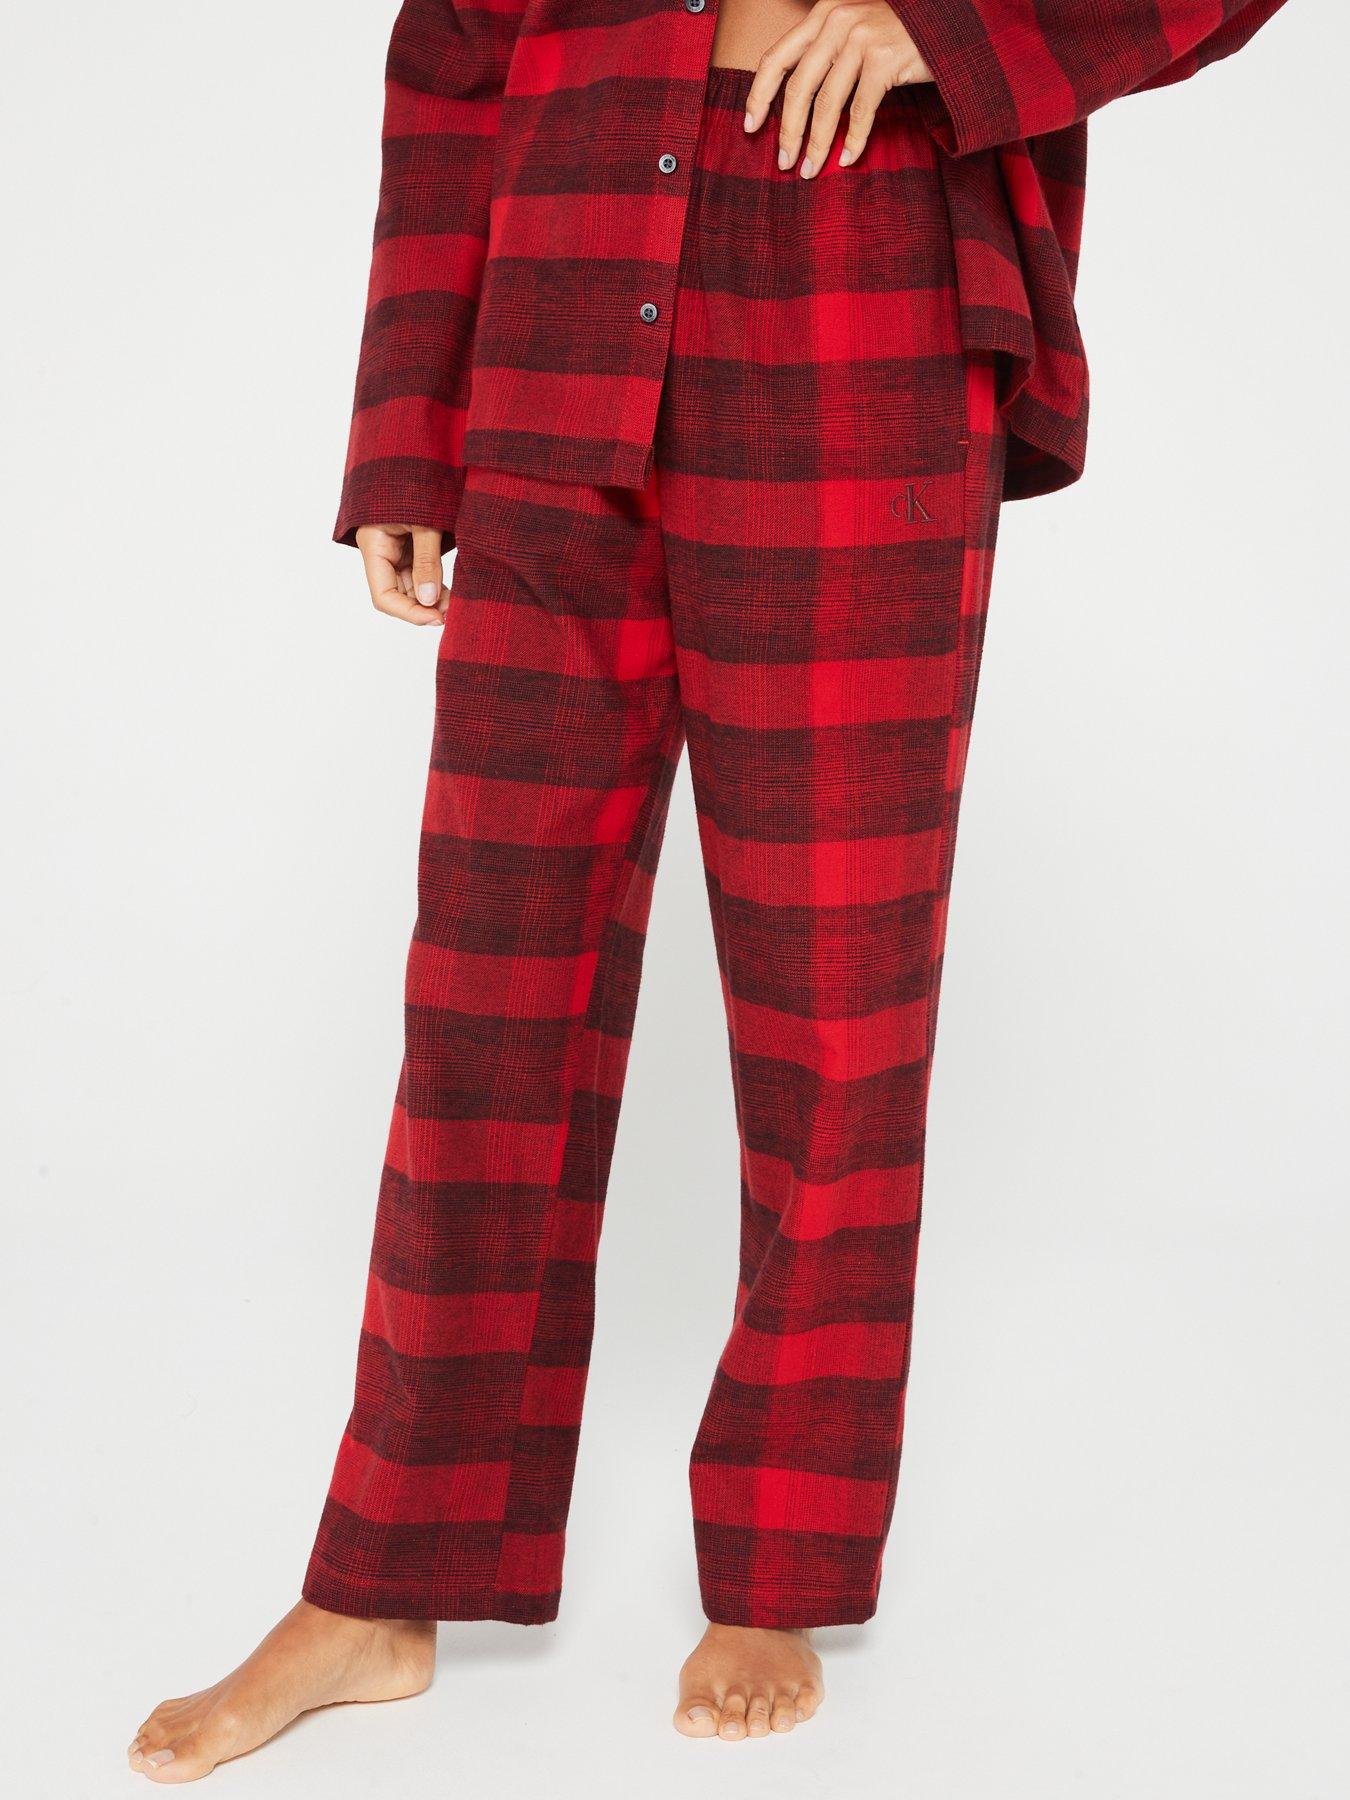 Calvin Klein Check Flannel Pyjama Trousers, Red/Black, XS